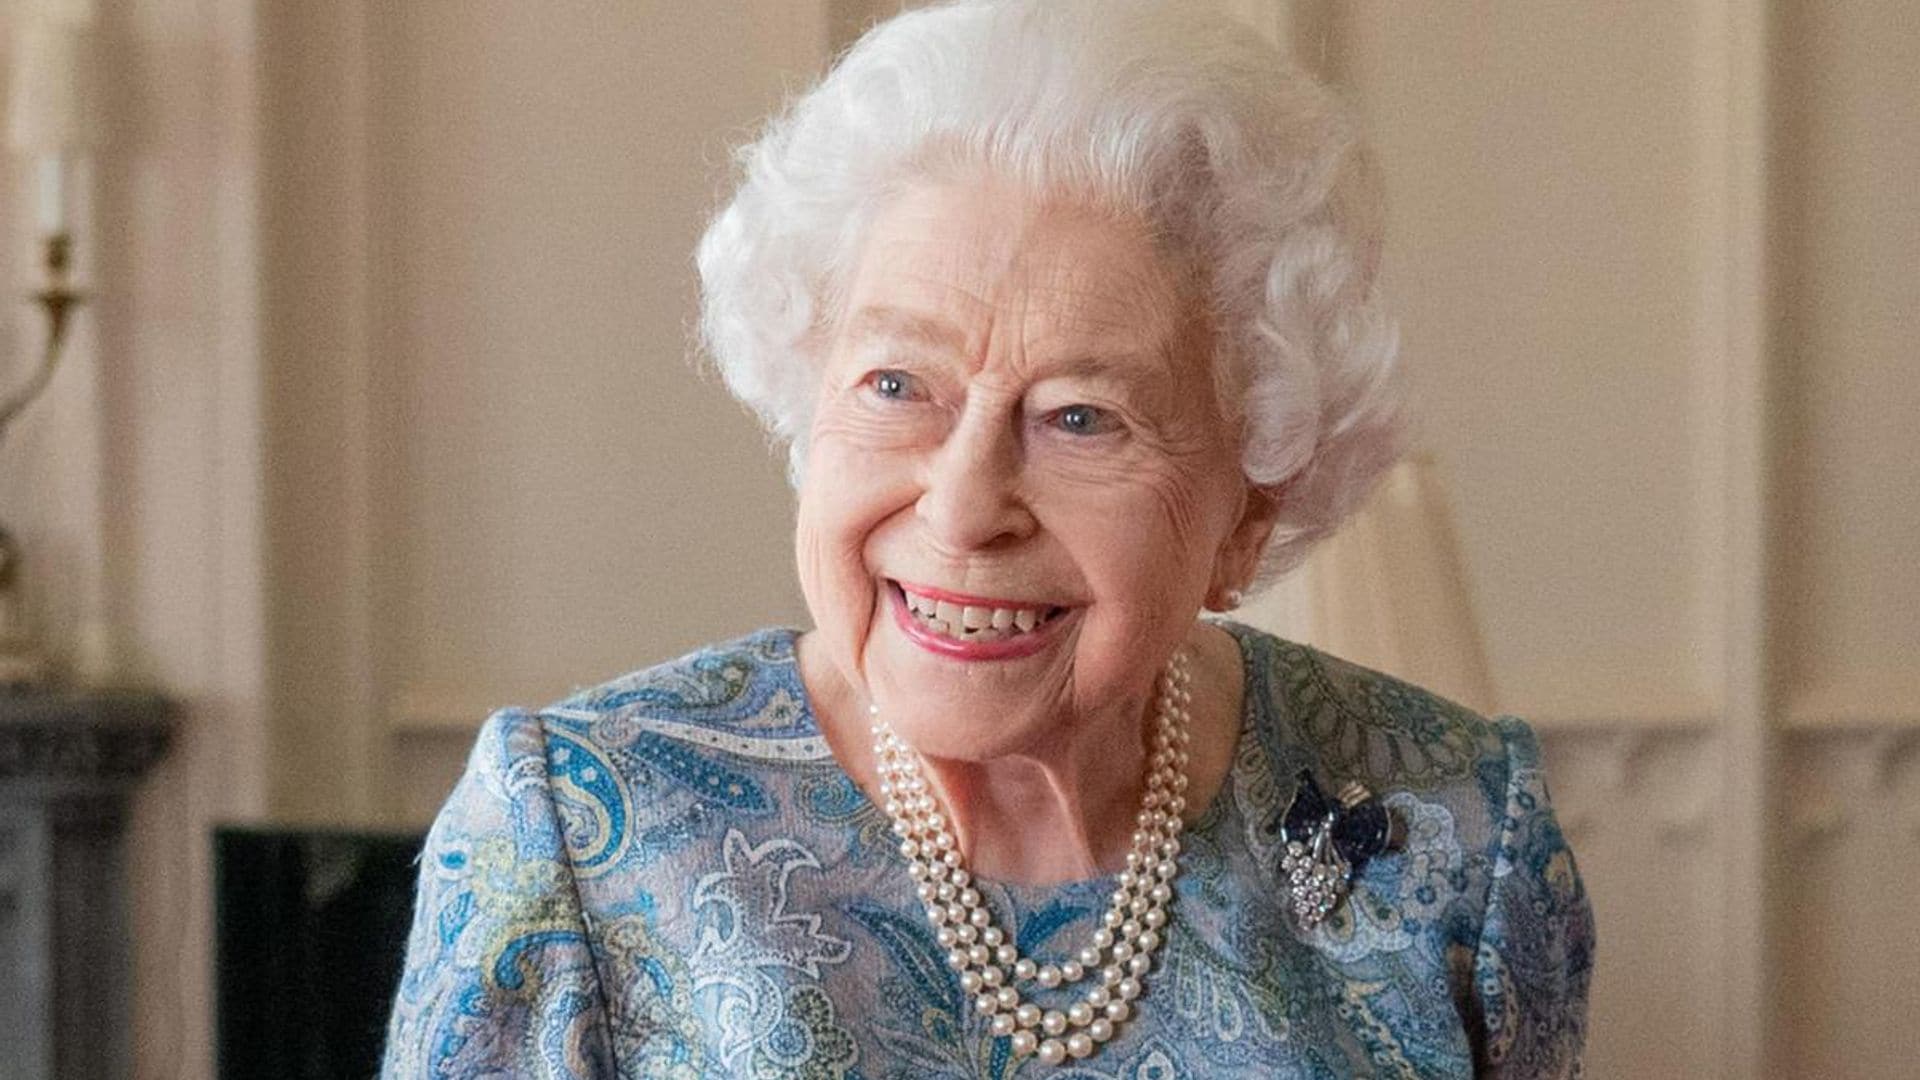 Queen Elizabeth’s great-granddaughter christened: Details